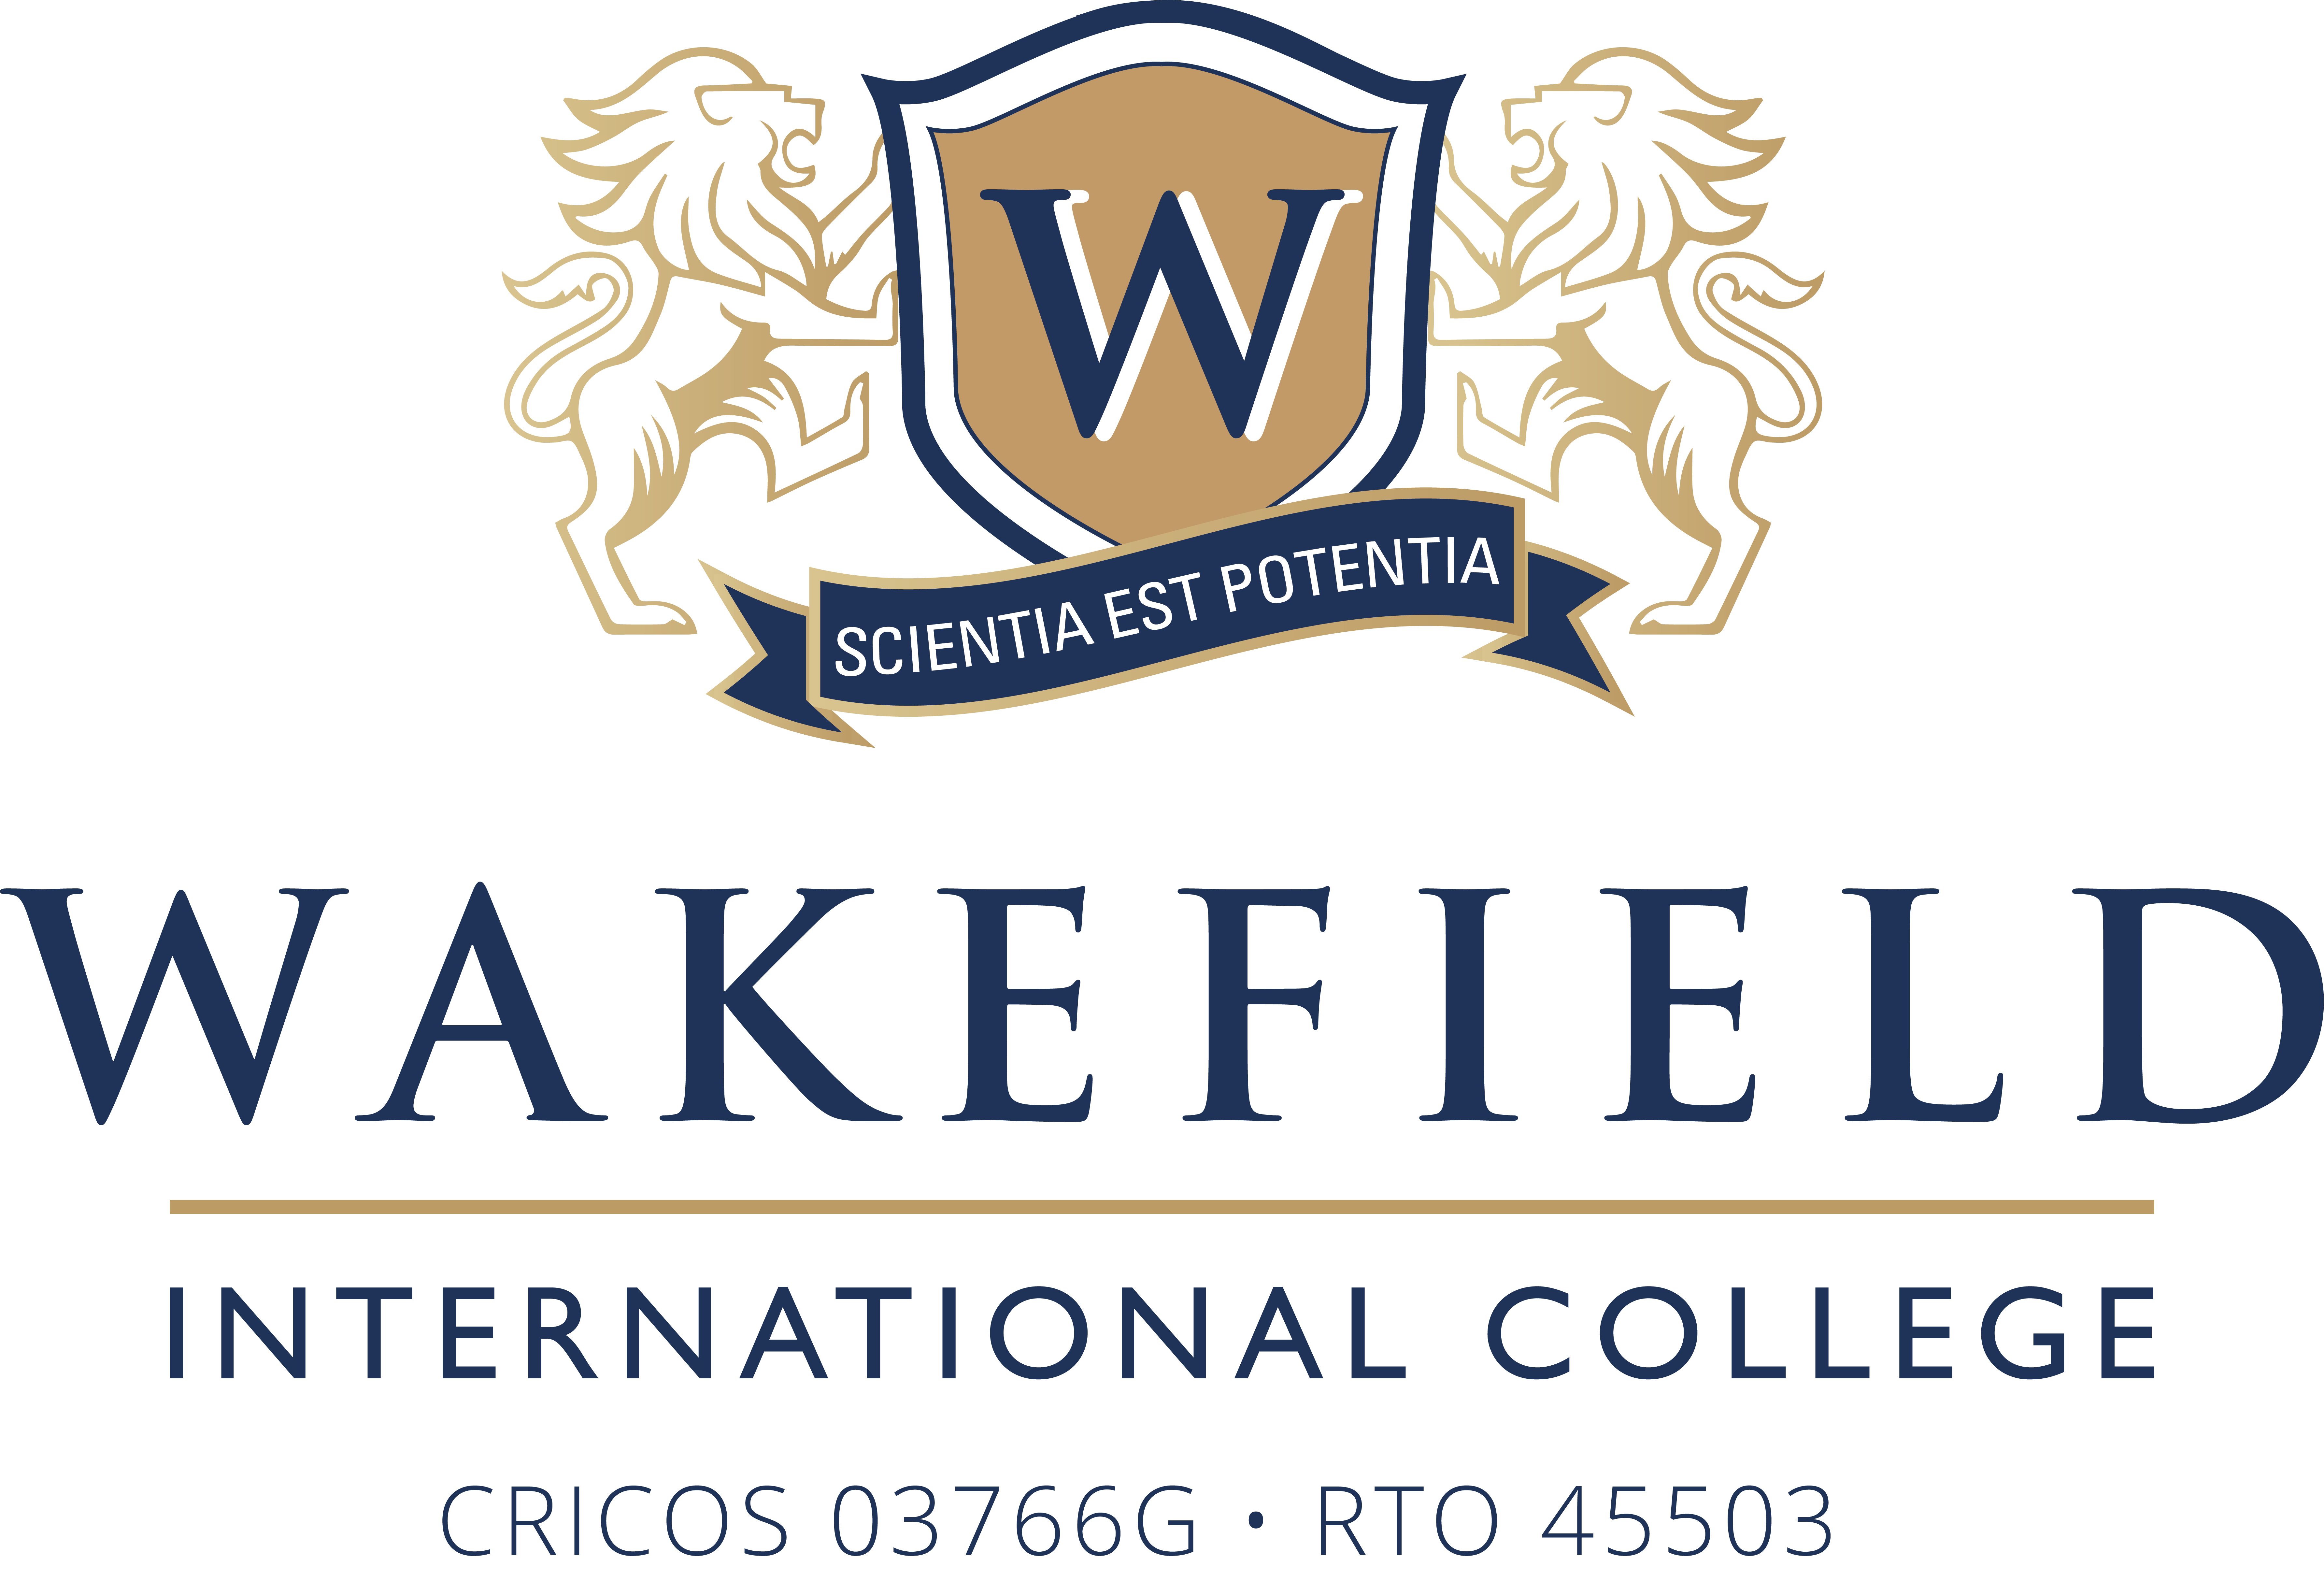 Wakefield International College